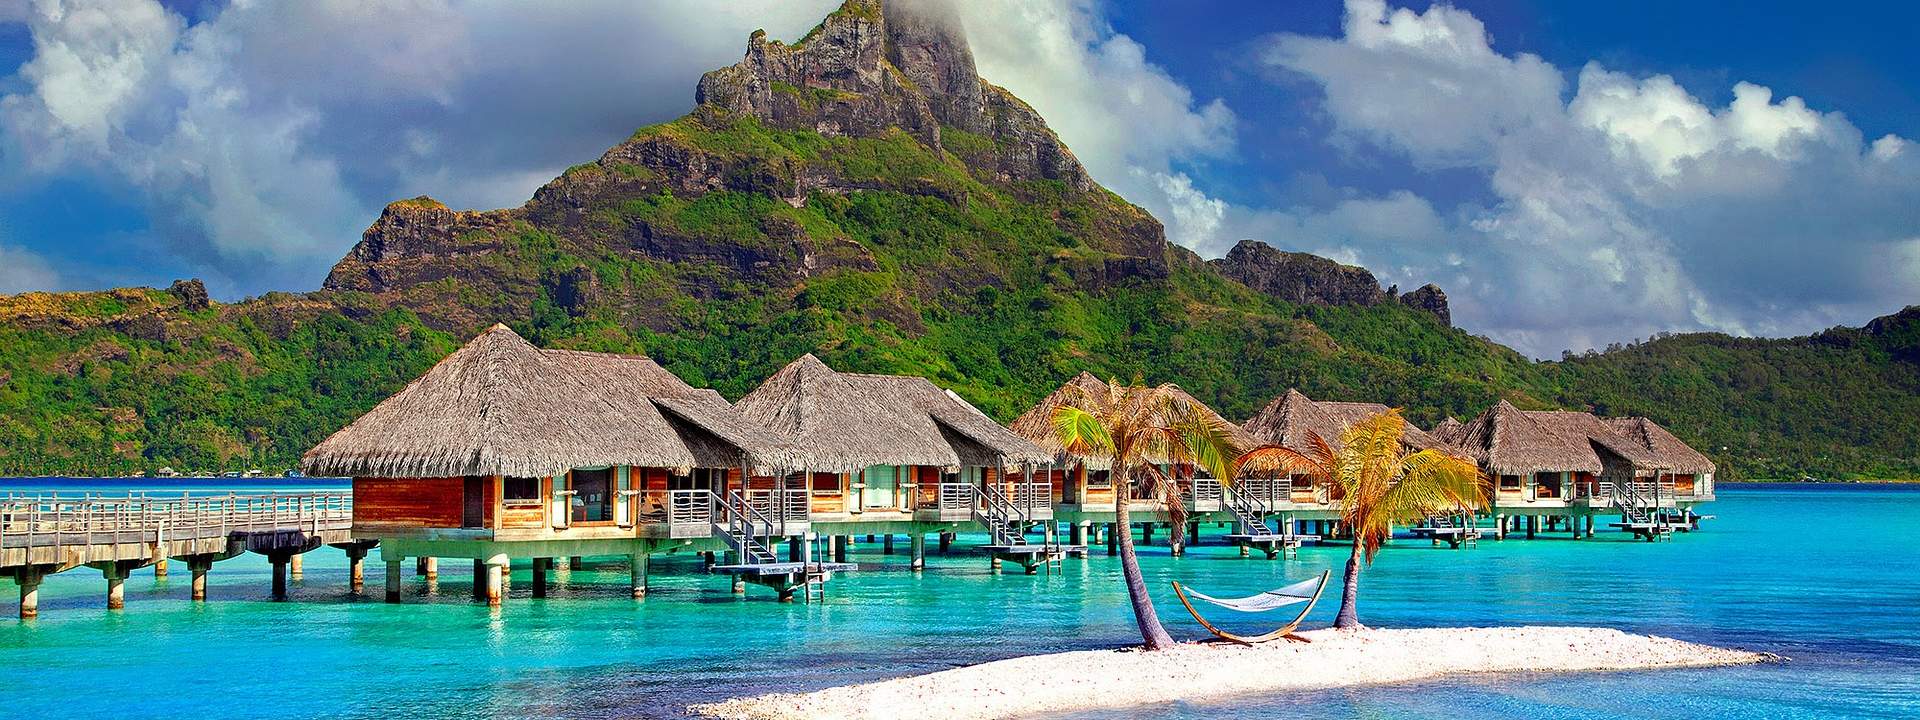 Explore the islands of Polynesia on a Cabin Cruise